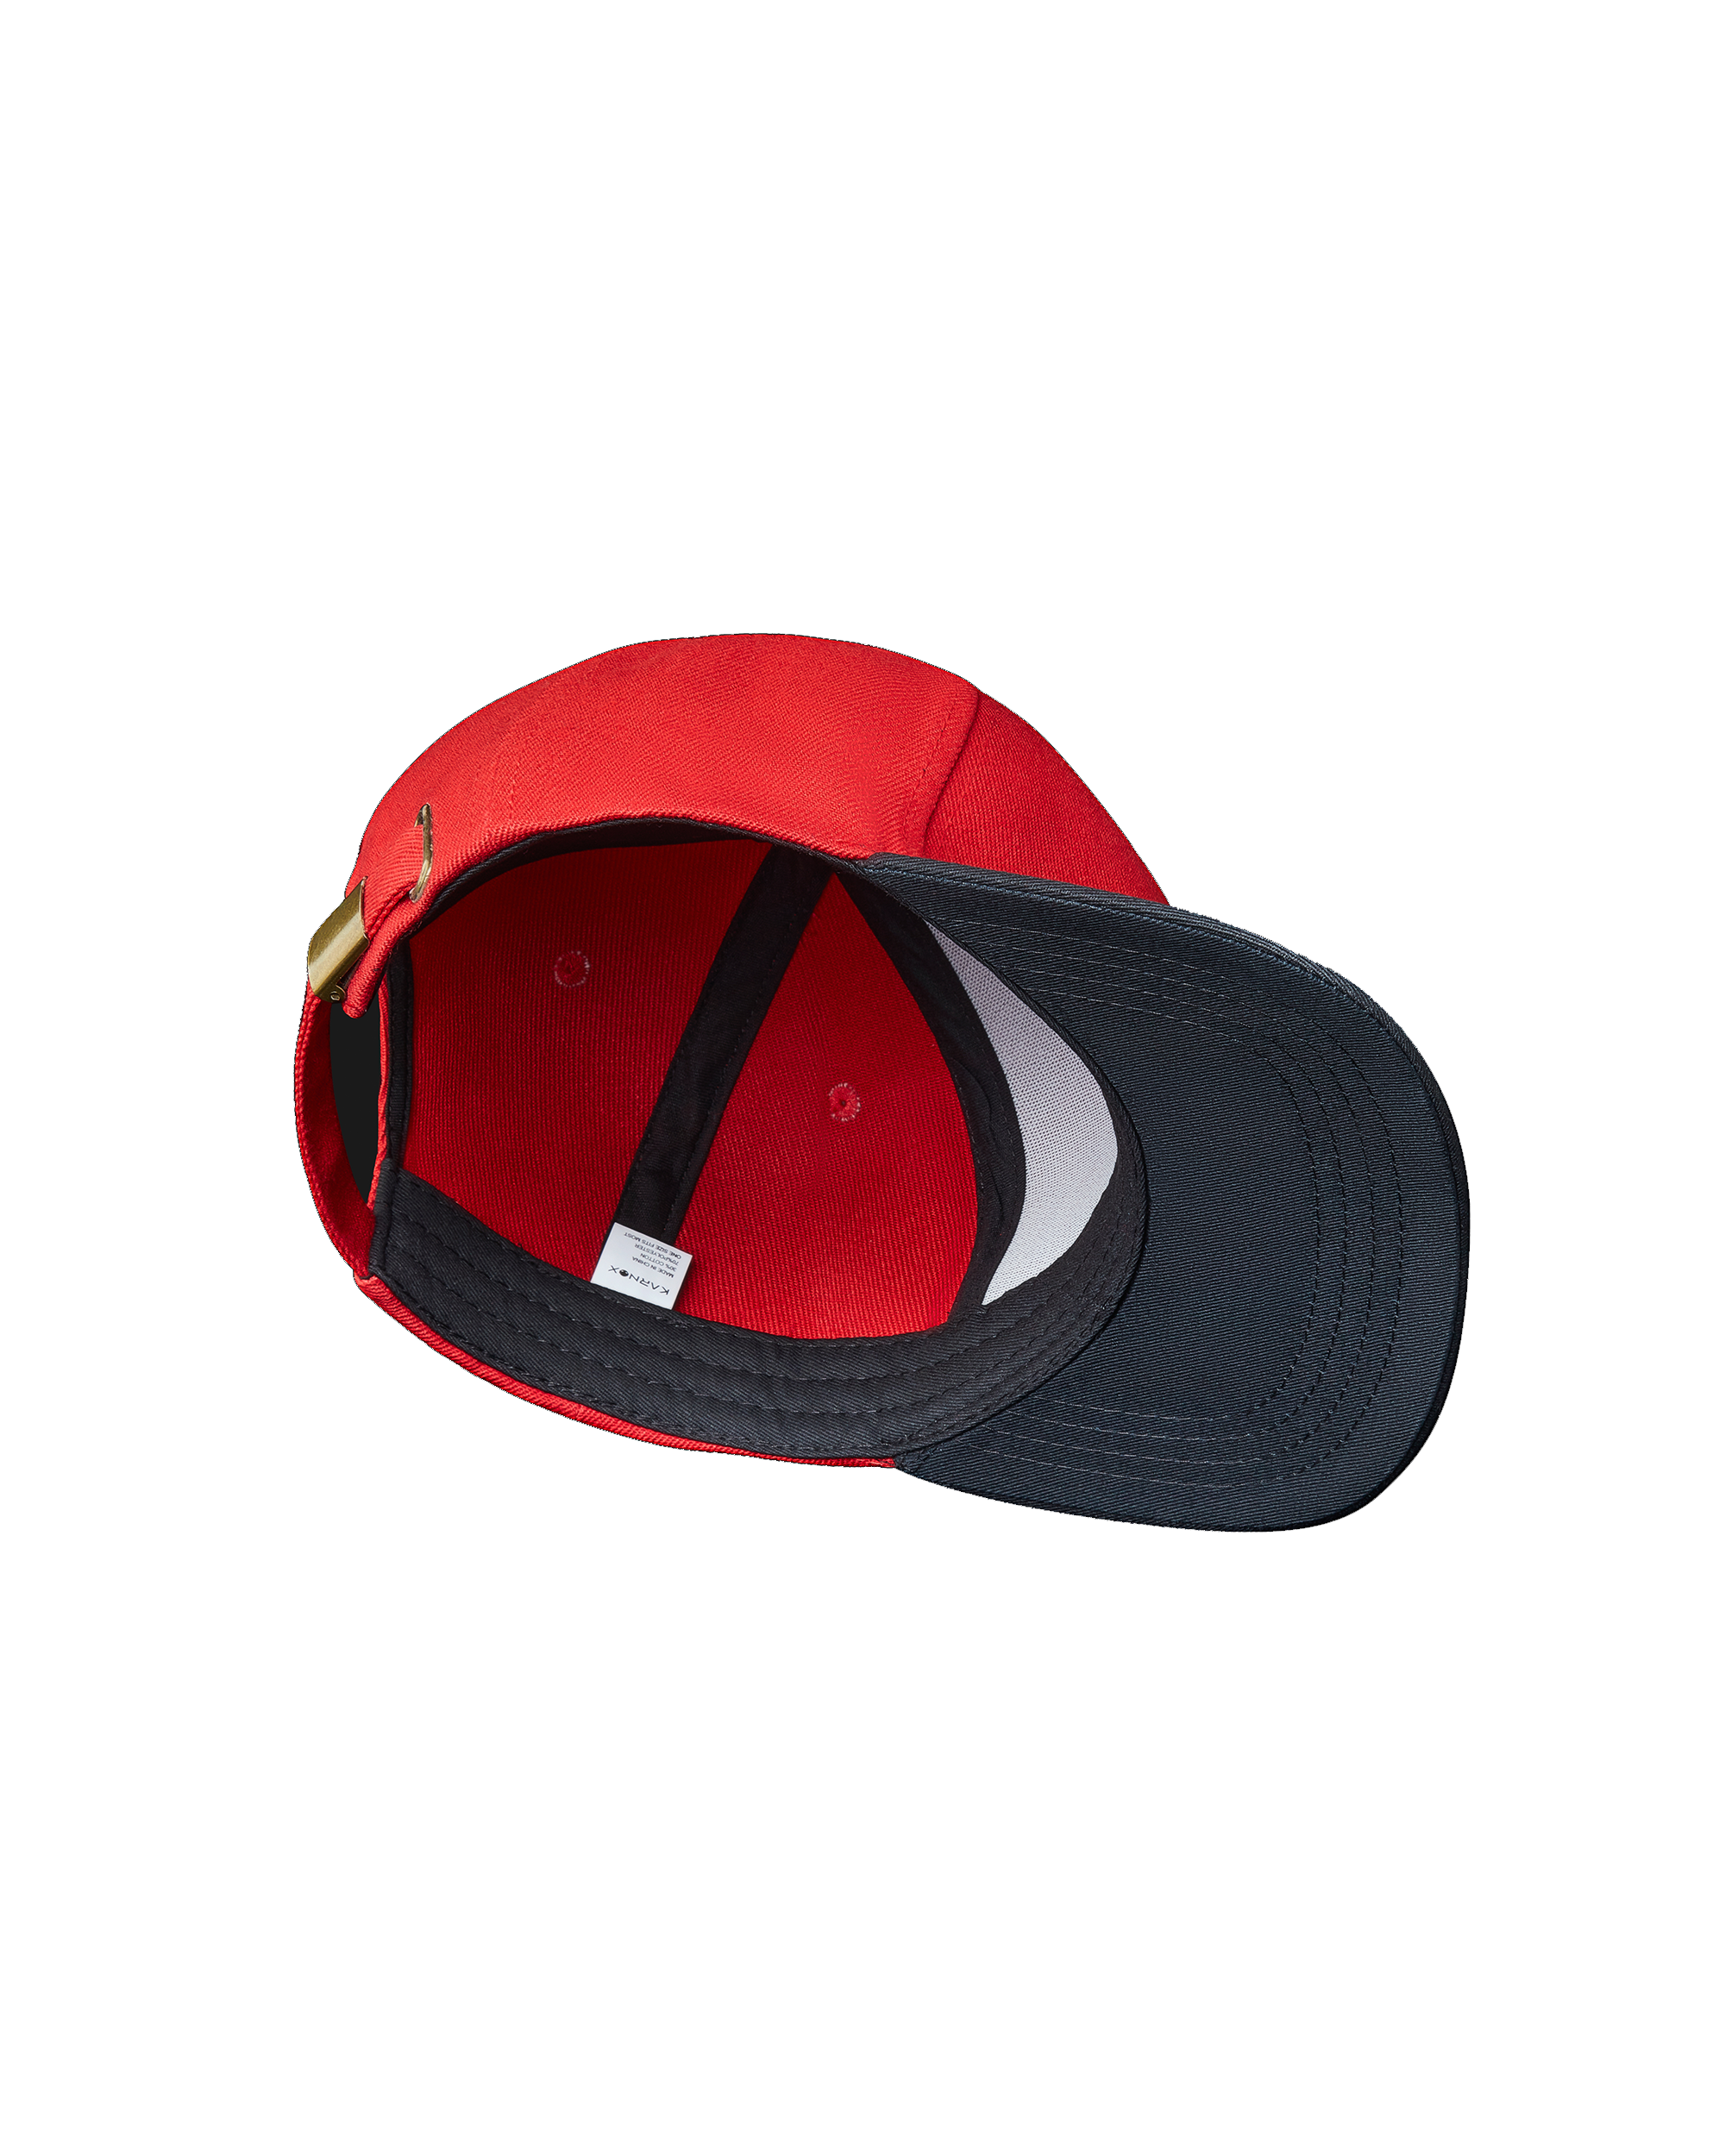 Karnox Snapback Hat / Red